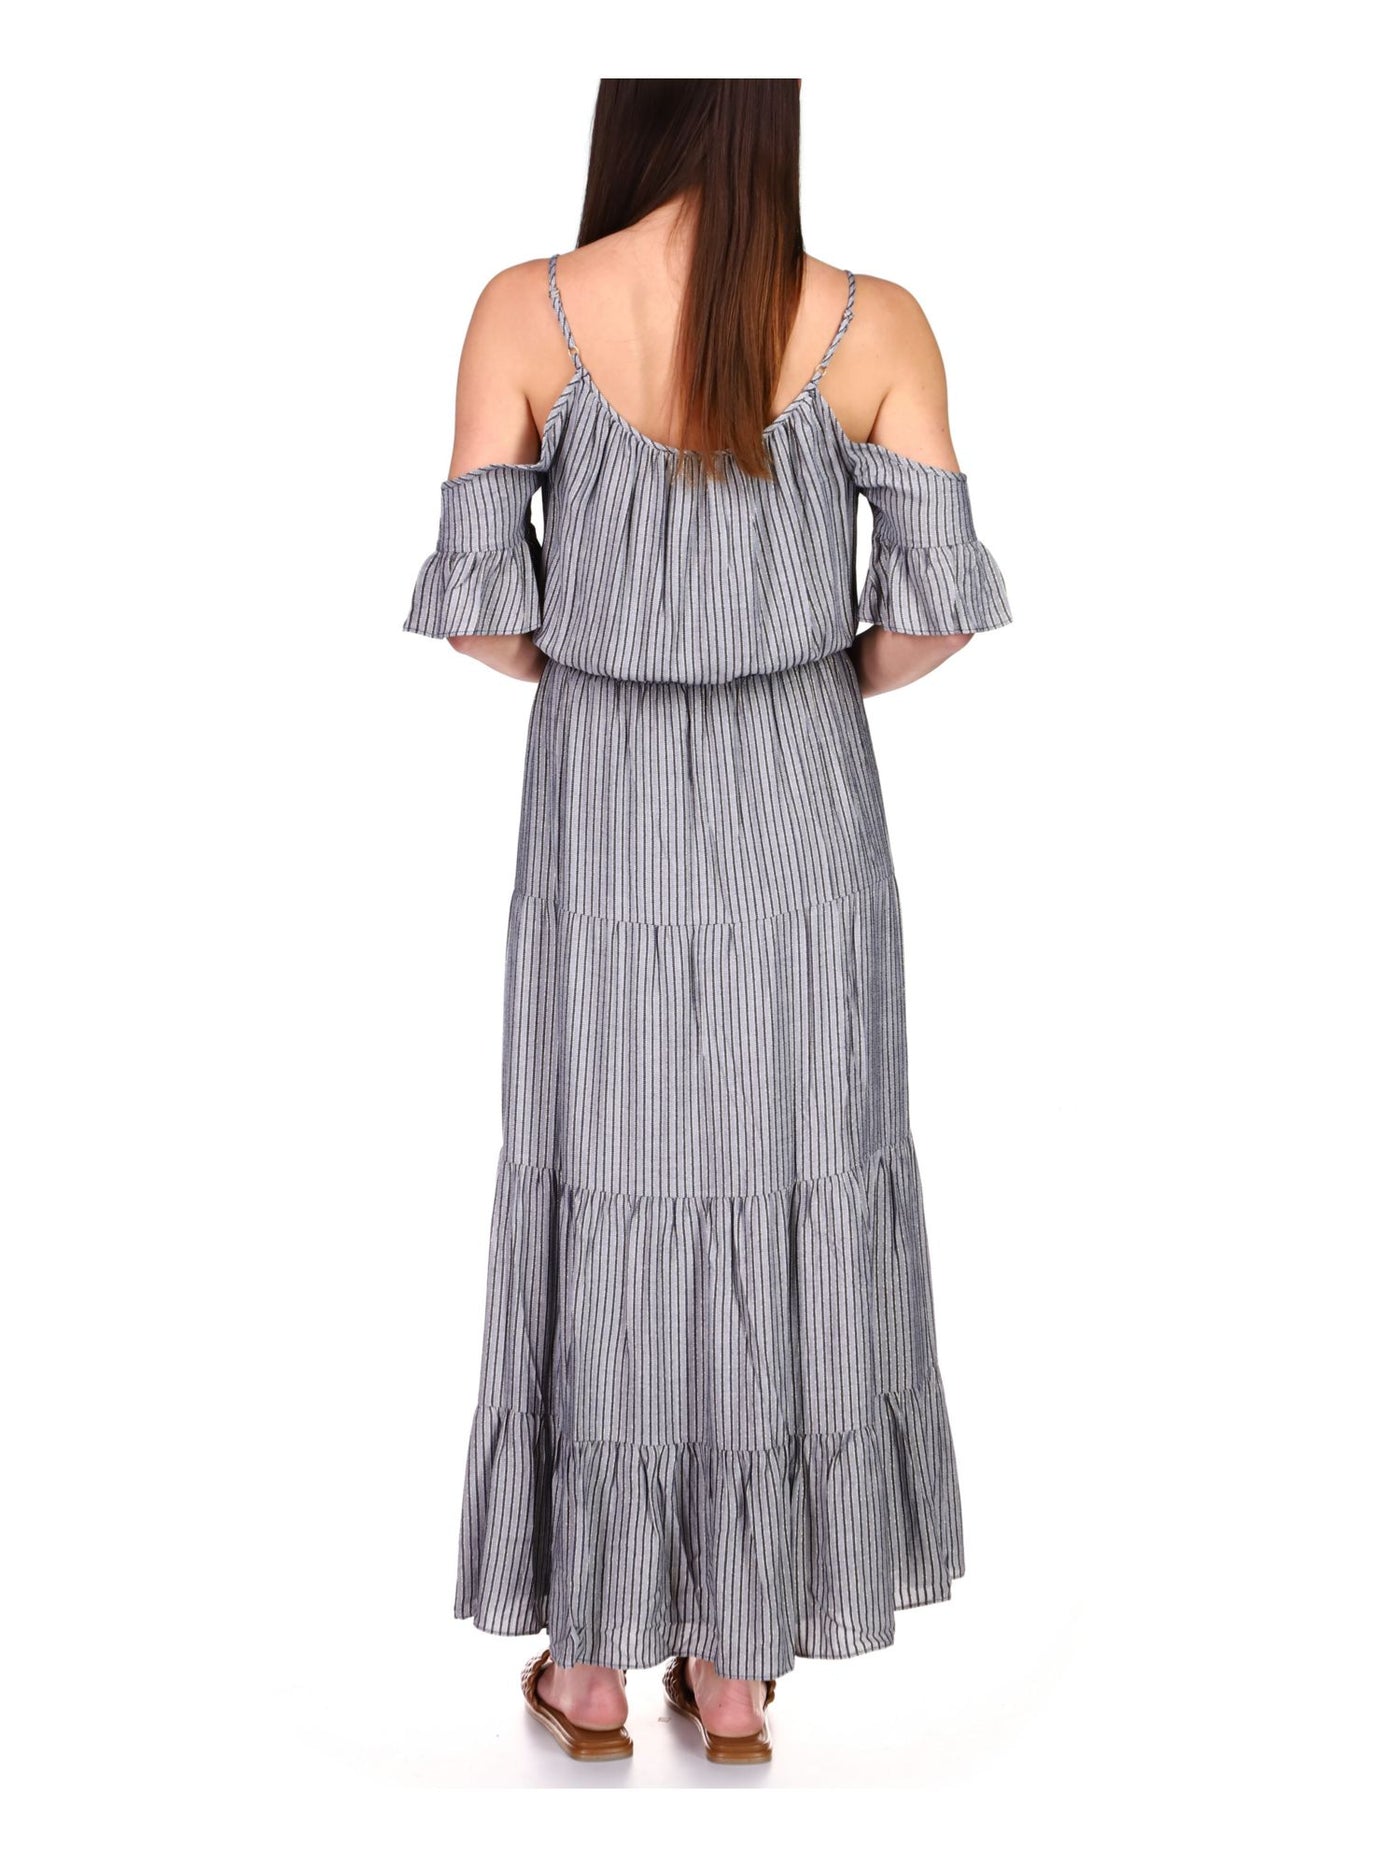 MICHAEL KORS Womens Blue Striped Elbow Maxi Fit + Flare Dress Size: L